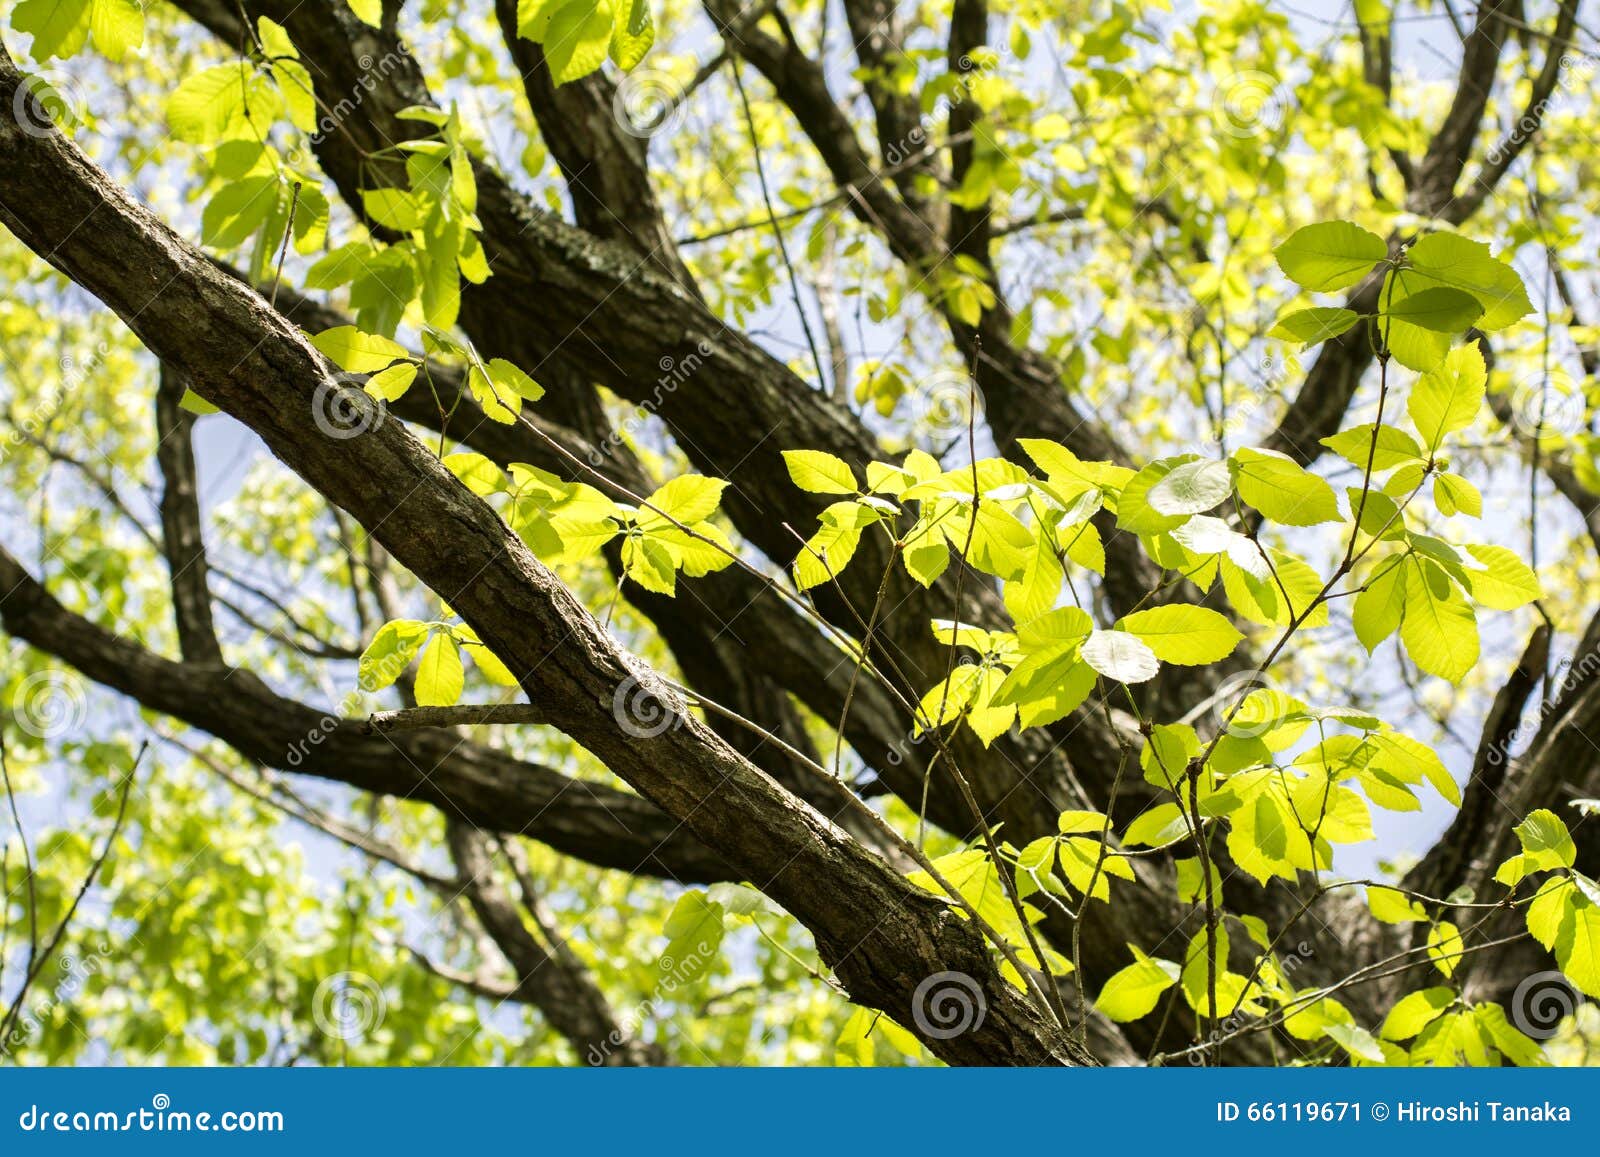 quercus serrata tree